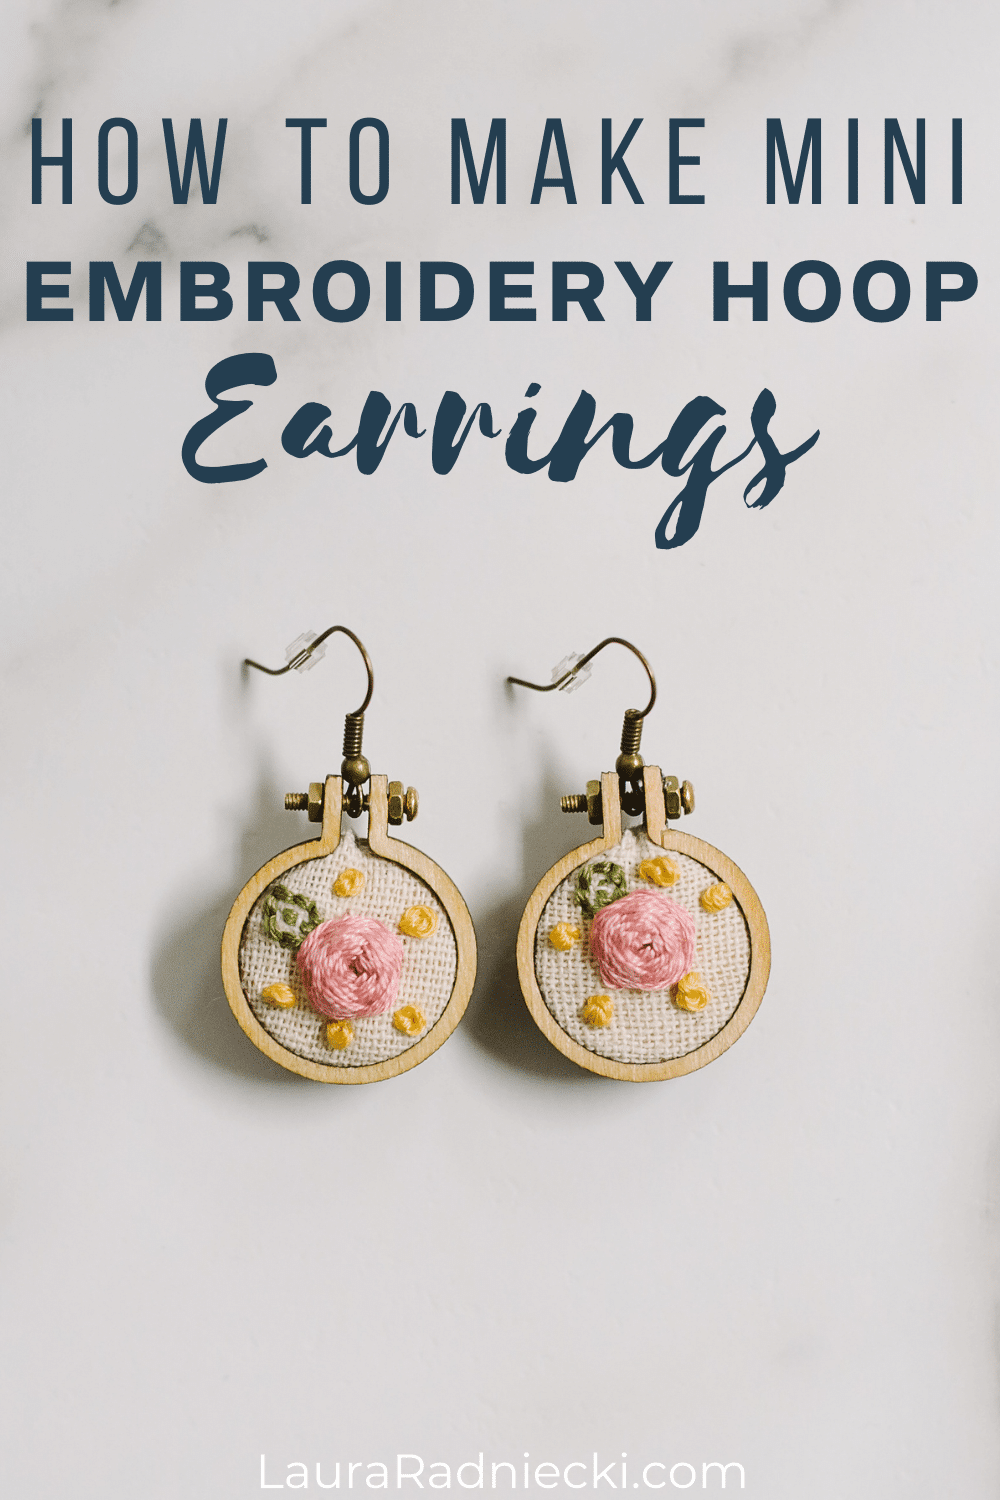 How to Make Mini Embroidery Hoop Earrings